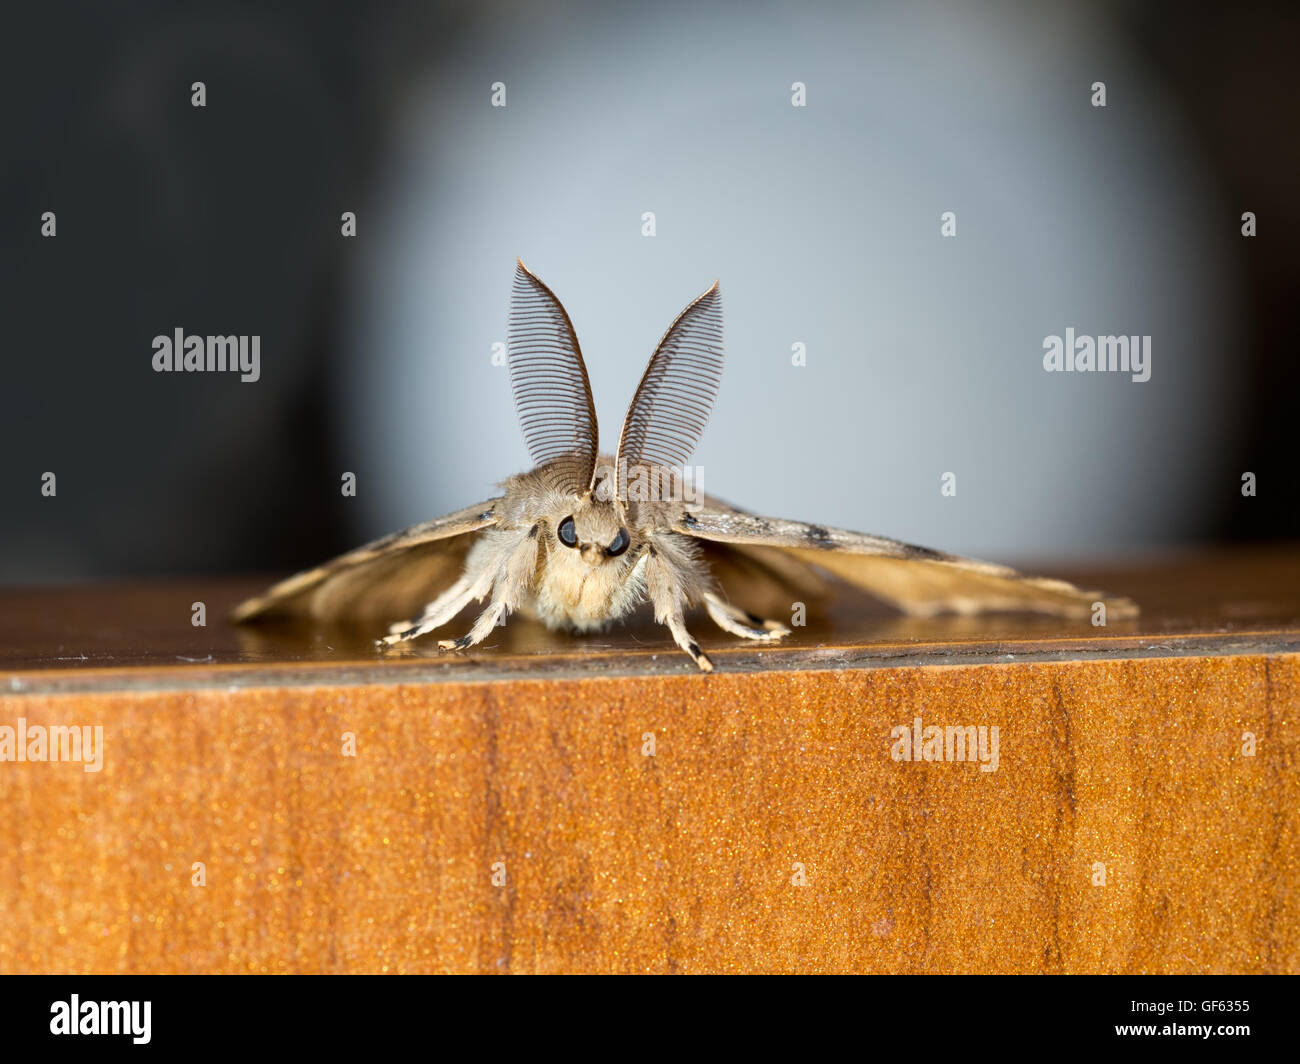 Lymantria dispar dispar aka Gypsy moth. Face showing clearly the large feathery antennae. Stock Photo